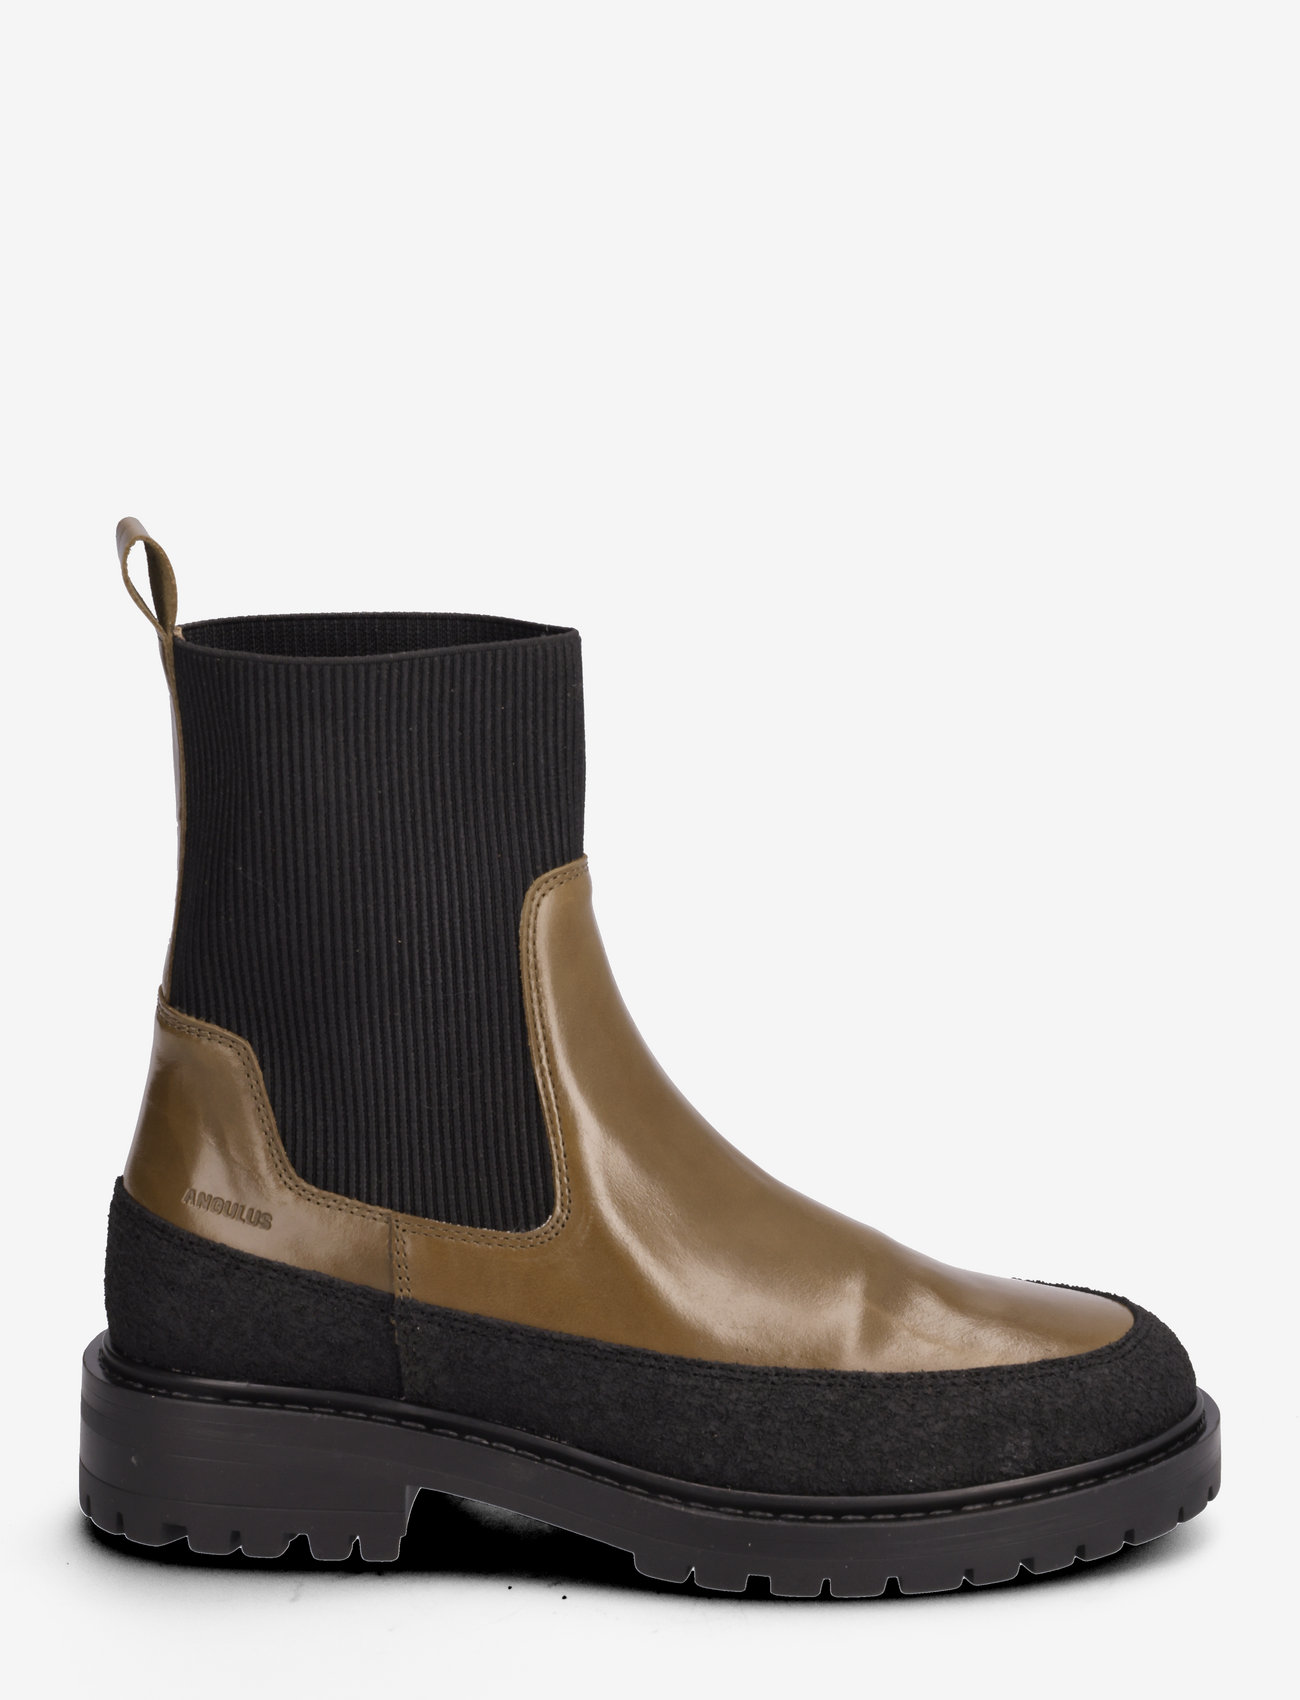 ANGULUS - Boots - flat - chelsea boots - 1321/1841/019  black/d. oliven - 1